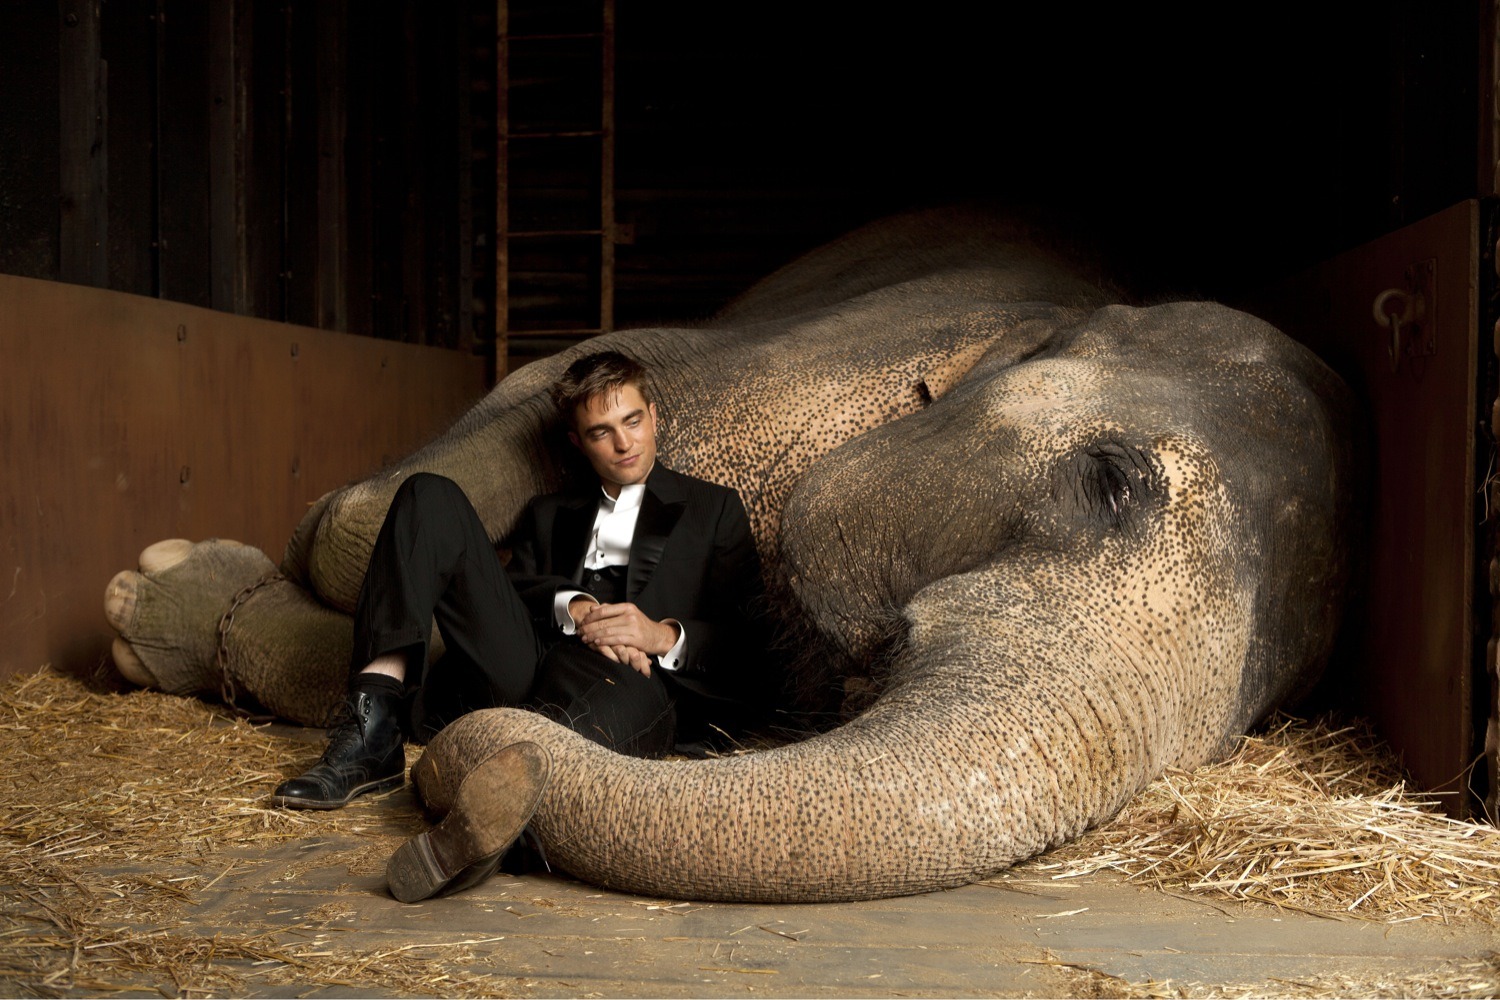 Rob with elephant